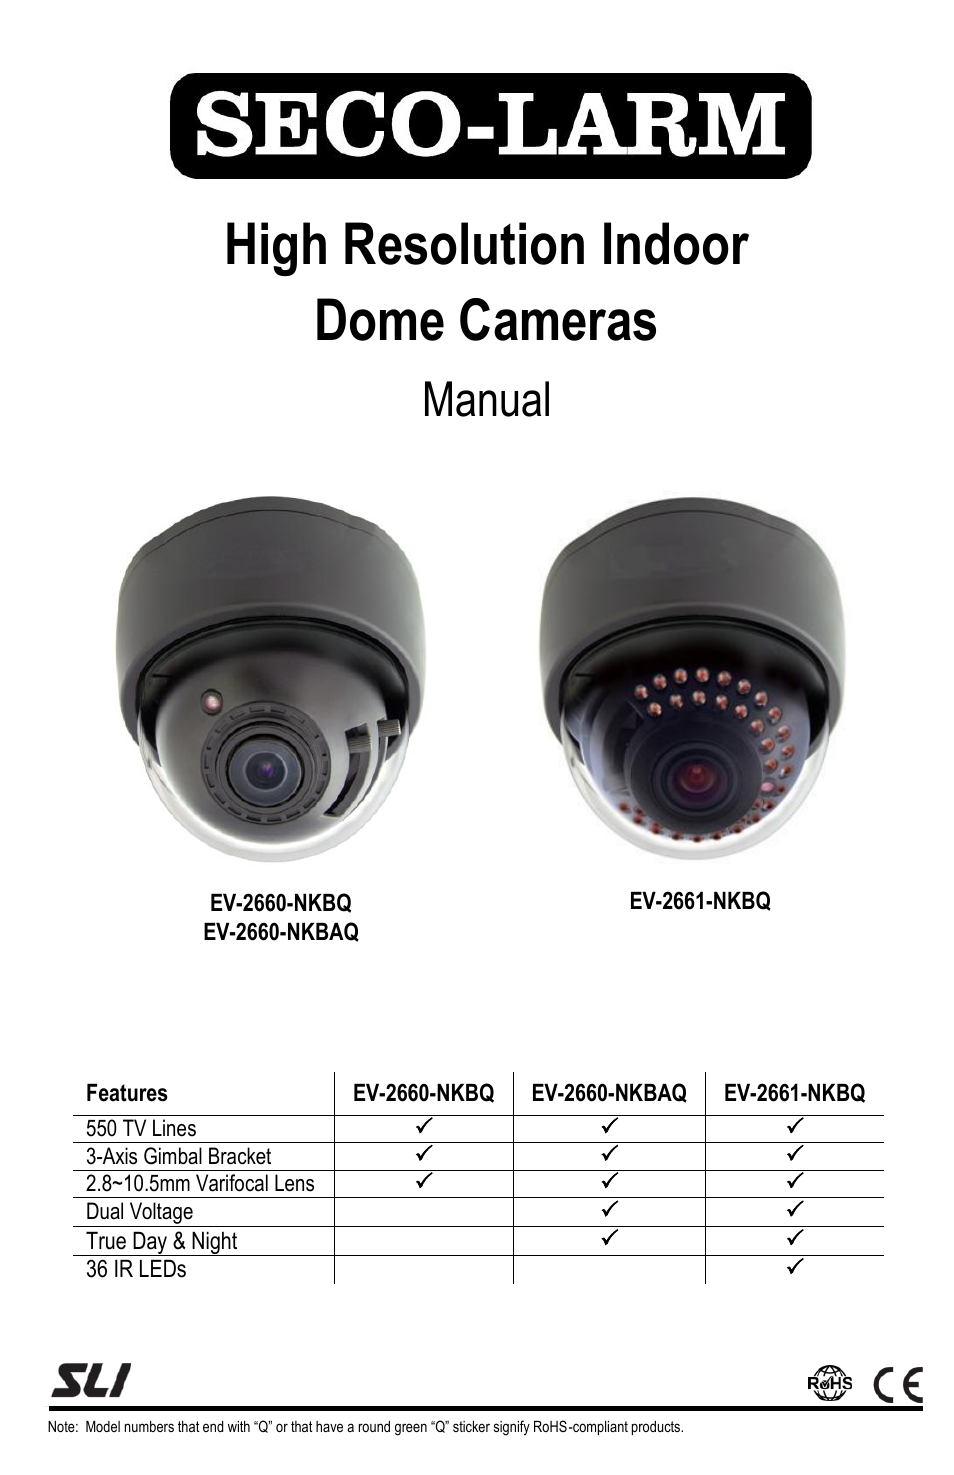 High Resolution Indoor Dome Cameras EV-2660-NKBQ